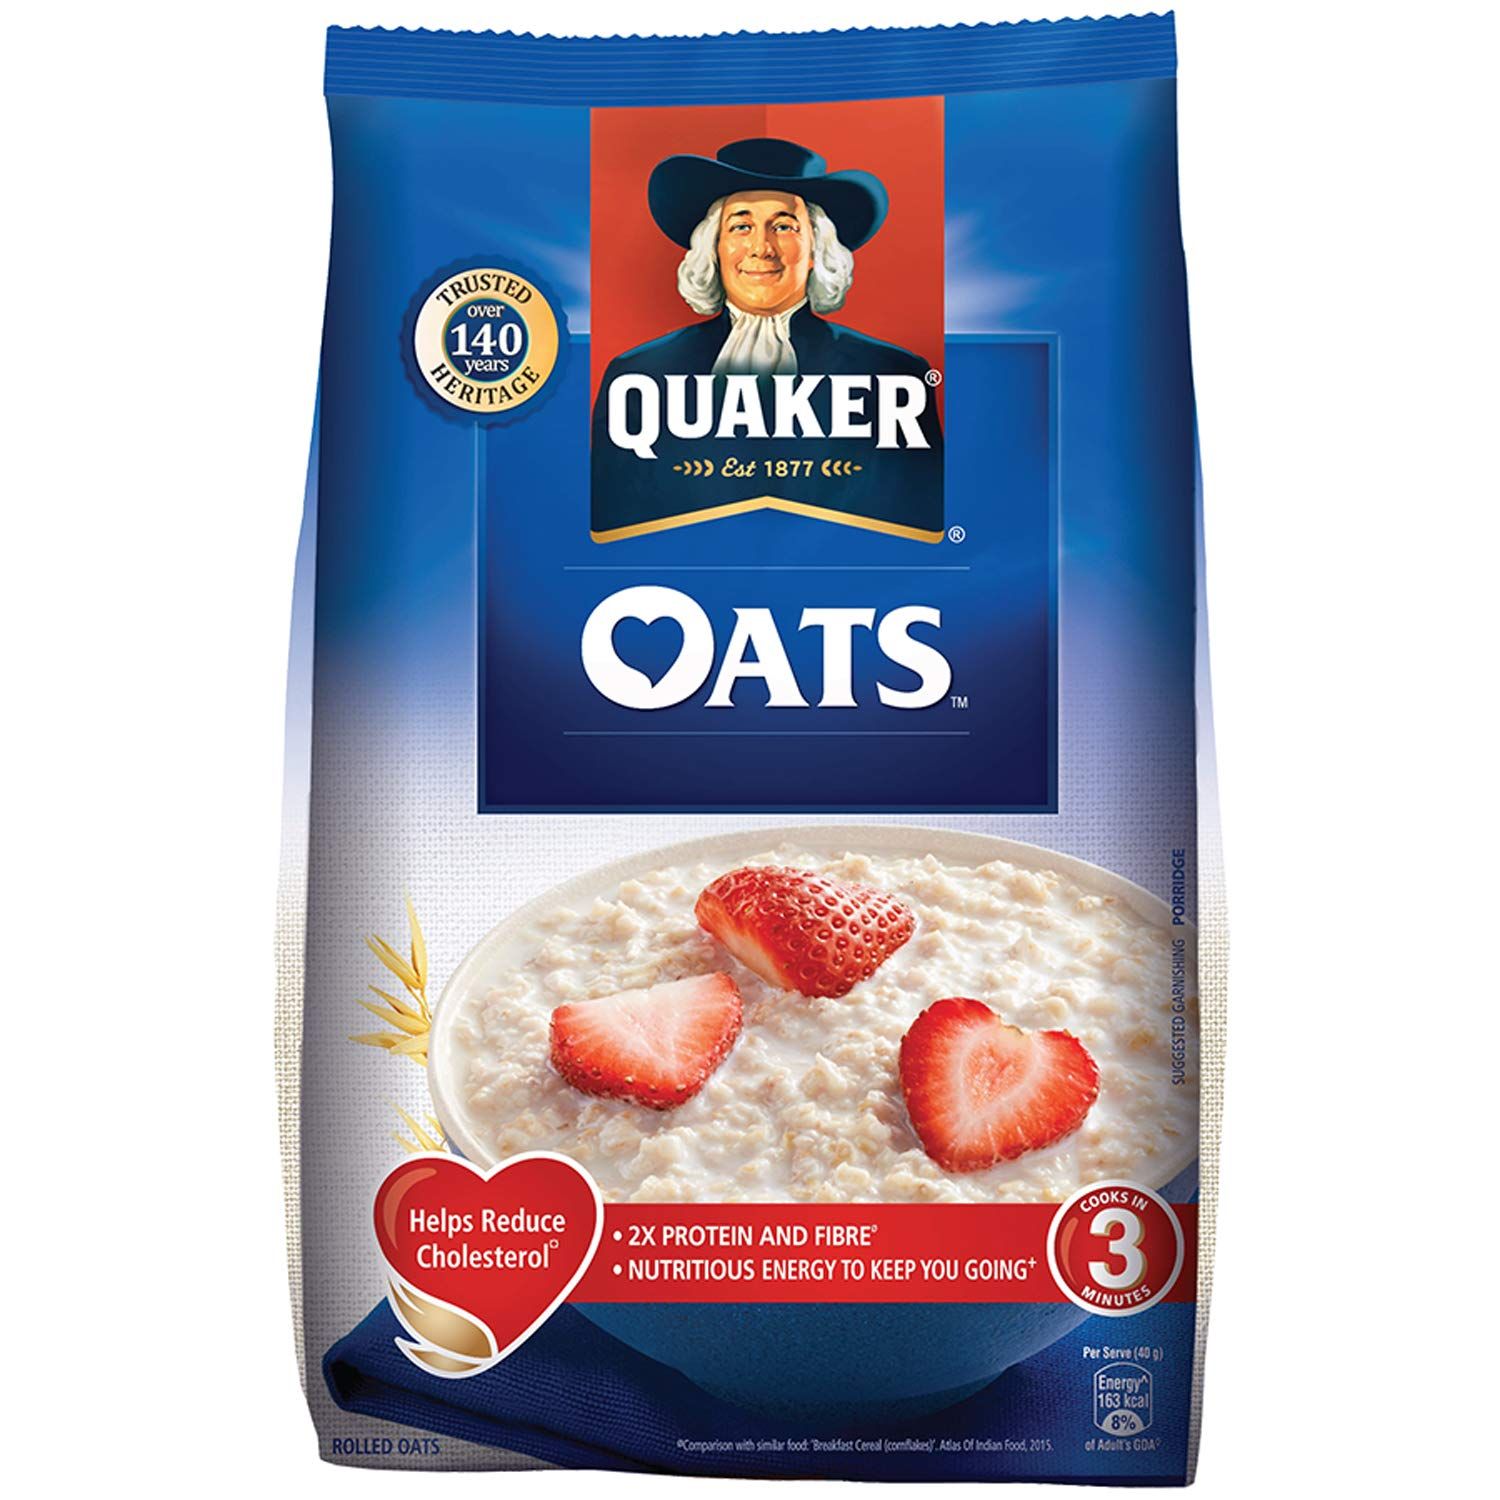 Quakar Oats Breakfast Cereal Image